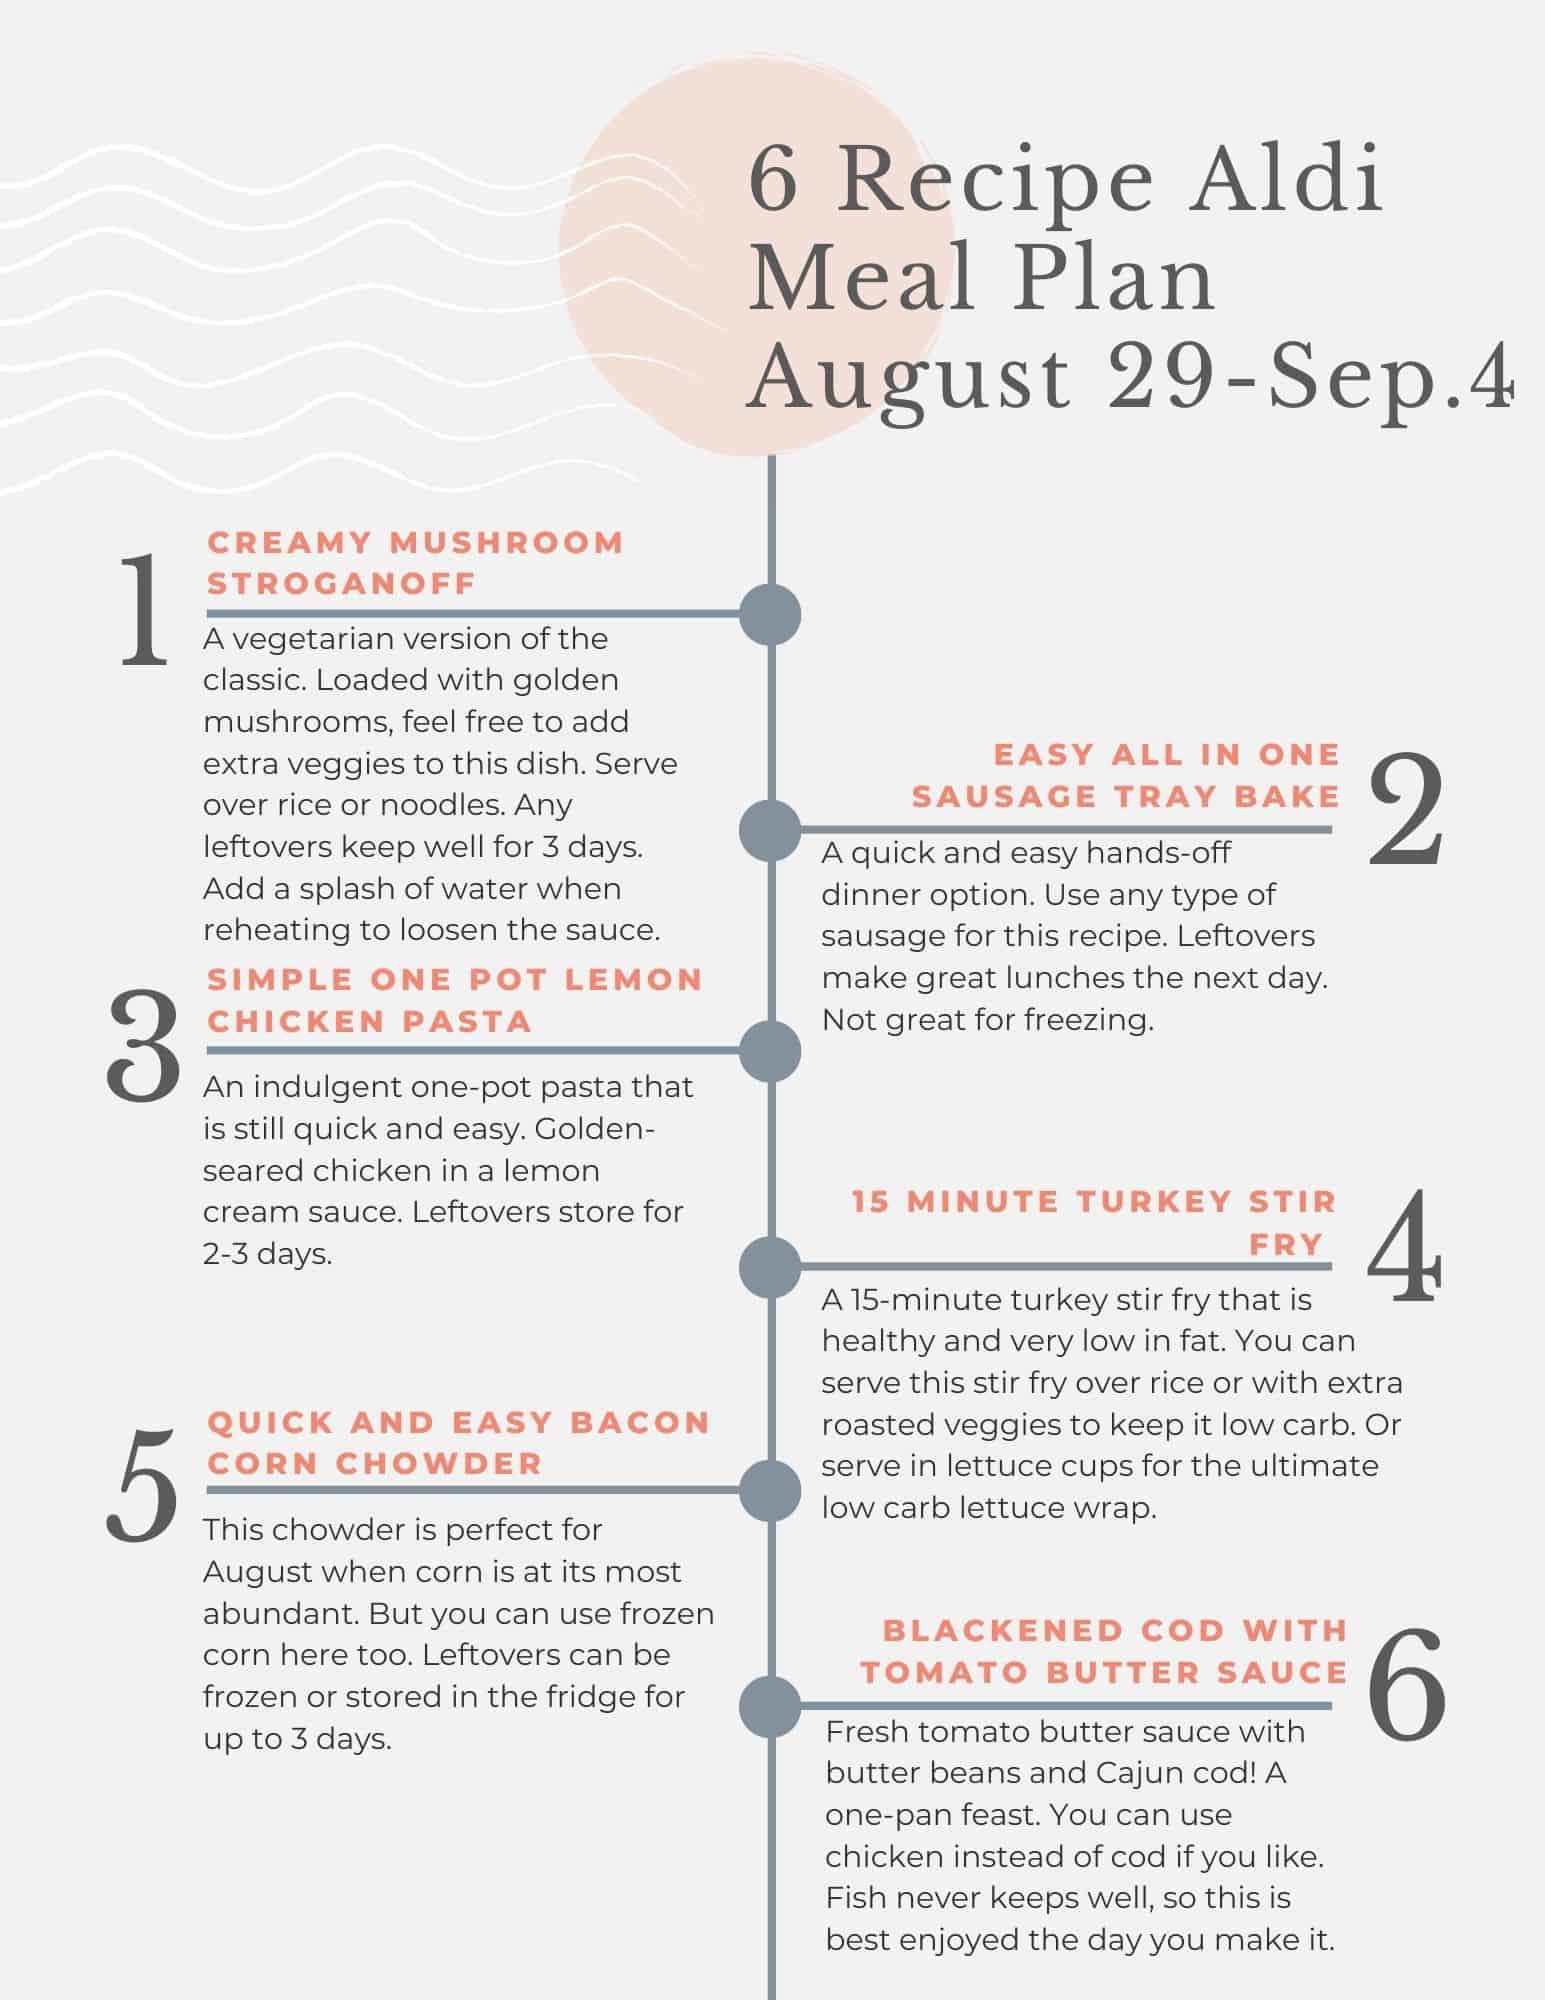 Budget meal plan tips sheet.